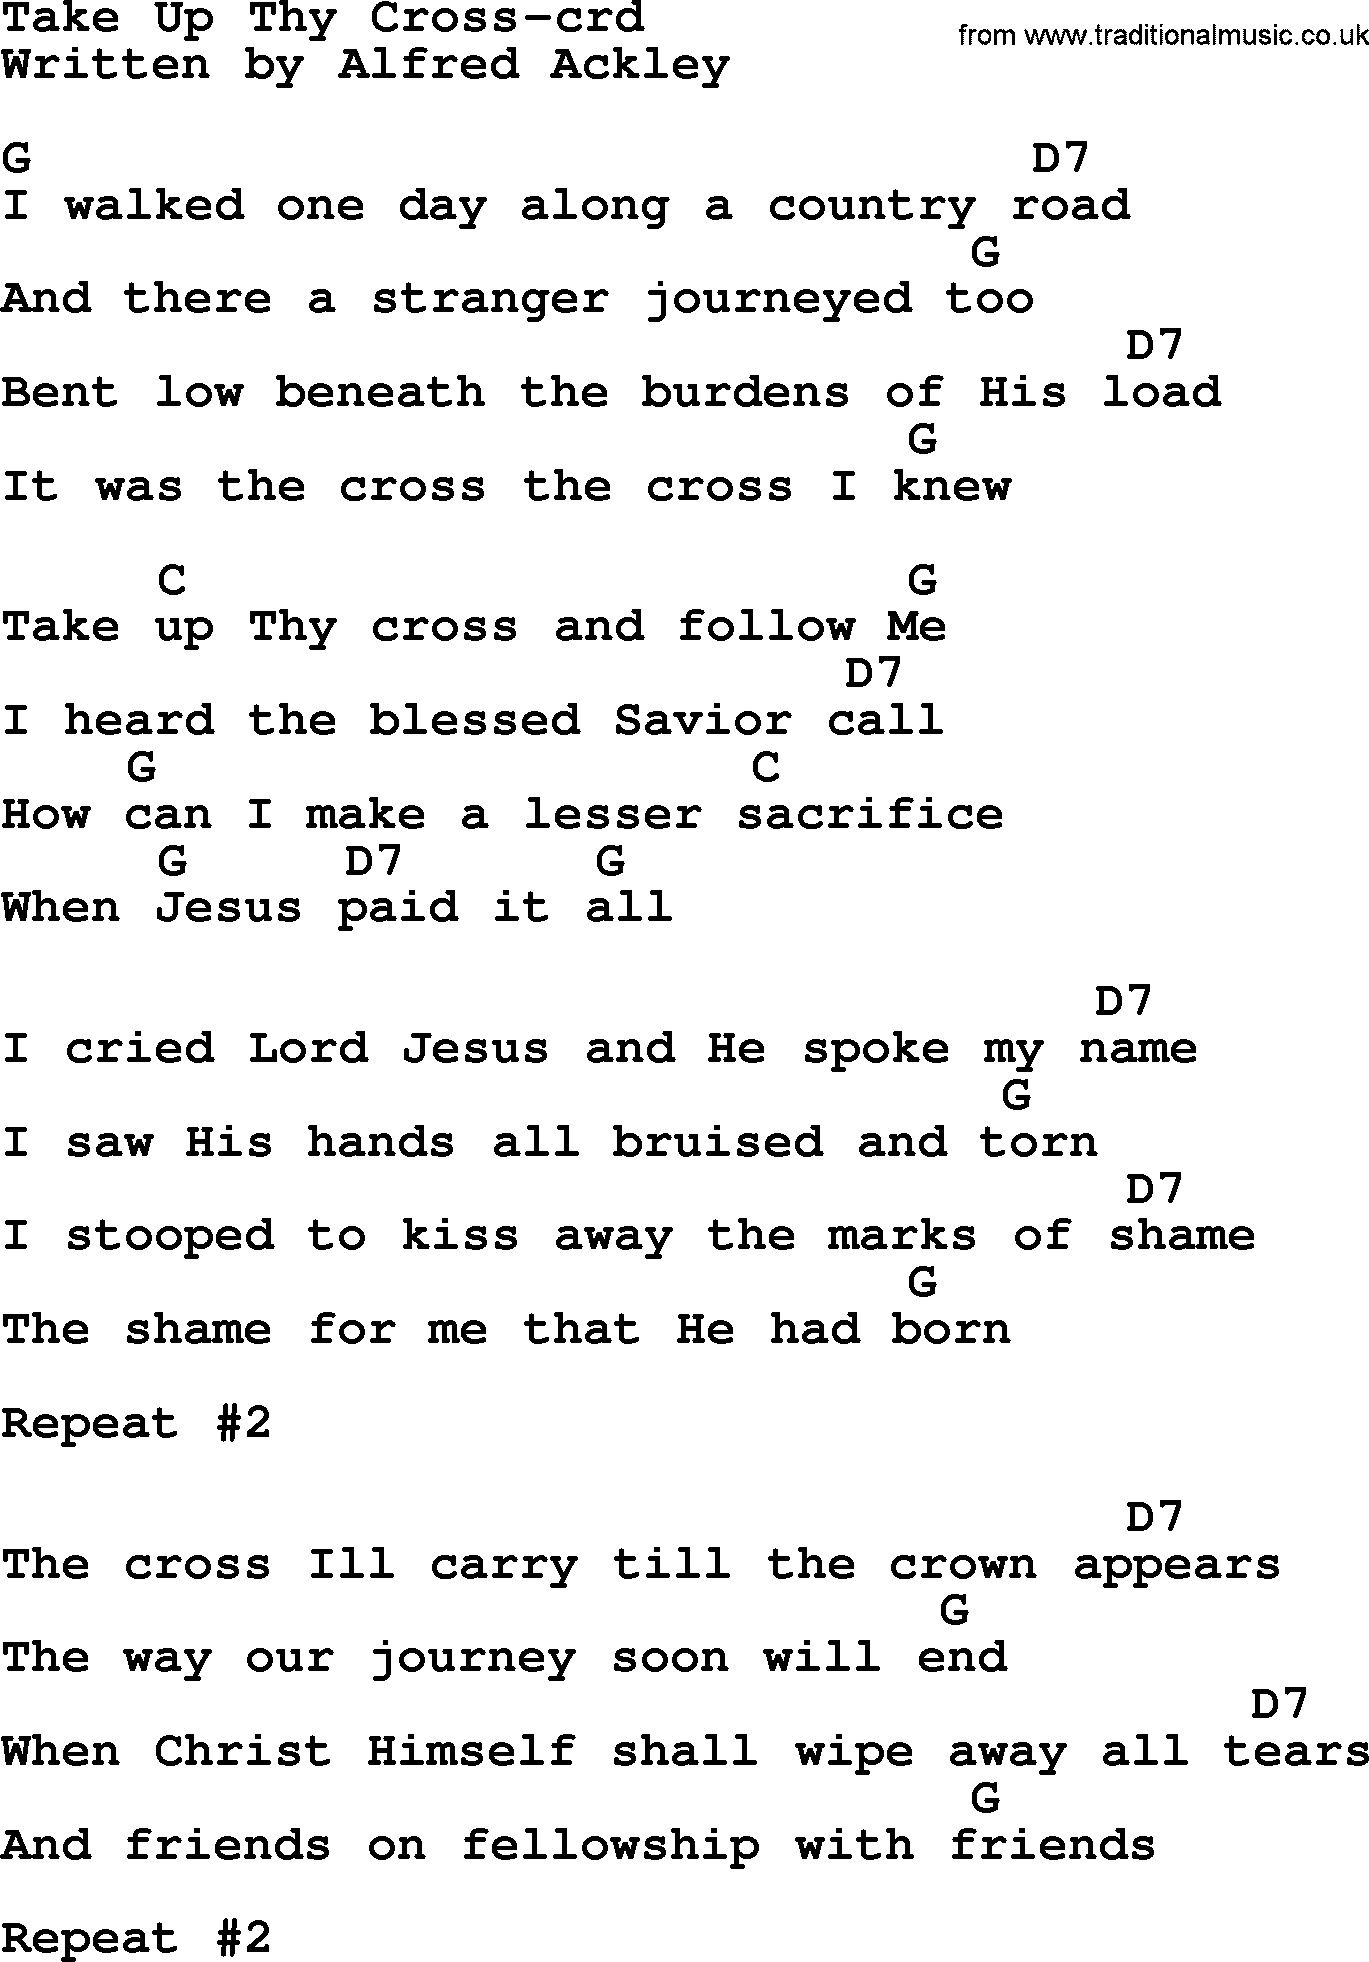 Jesus Paid It All Chords Top 500 Hymn Take Up Thy Cross Lyrics Chords And Pdf